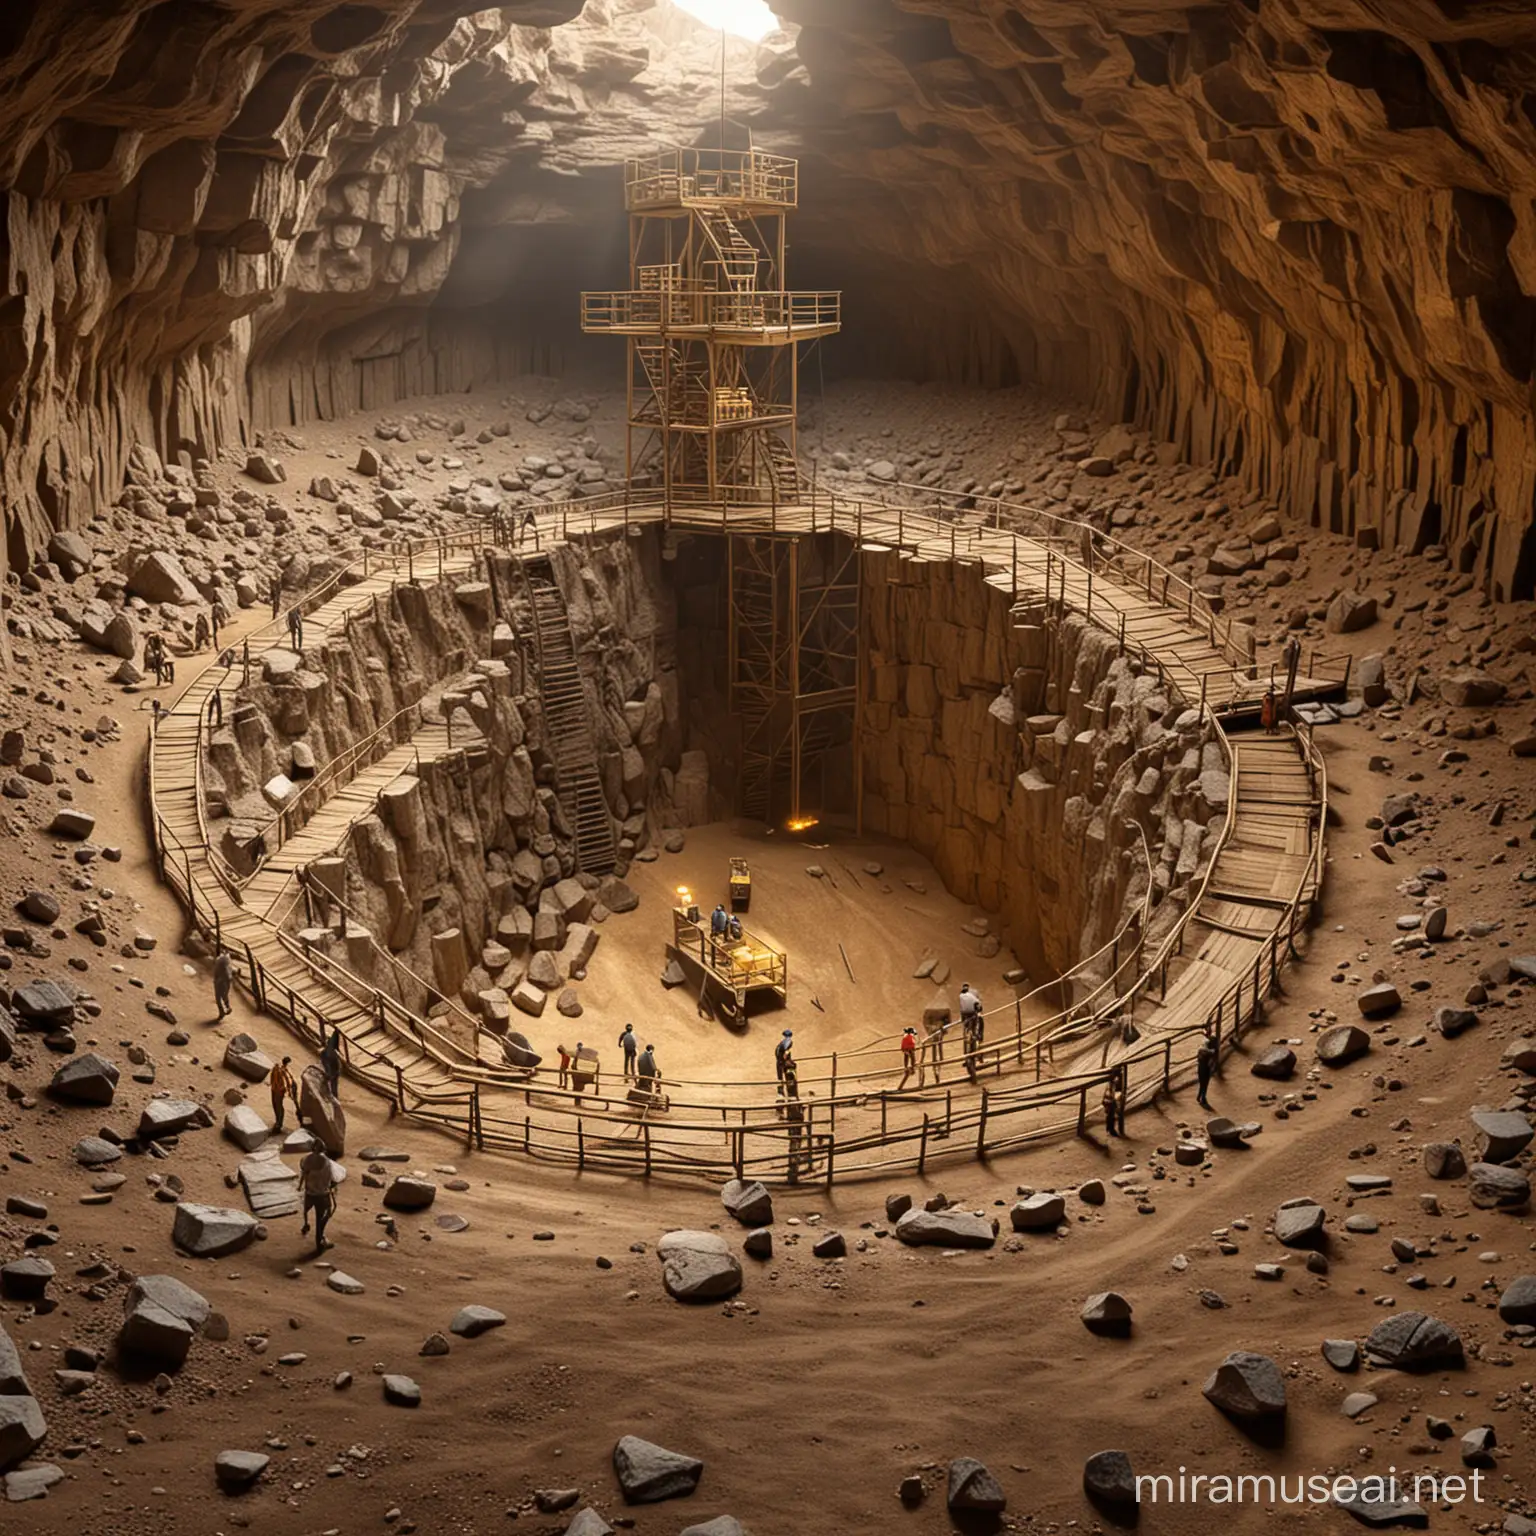 Prospectors Unearthing Golden Treasures in a Vibrant Hypothetical Mine